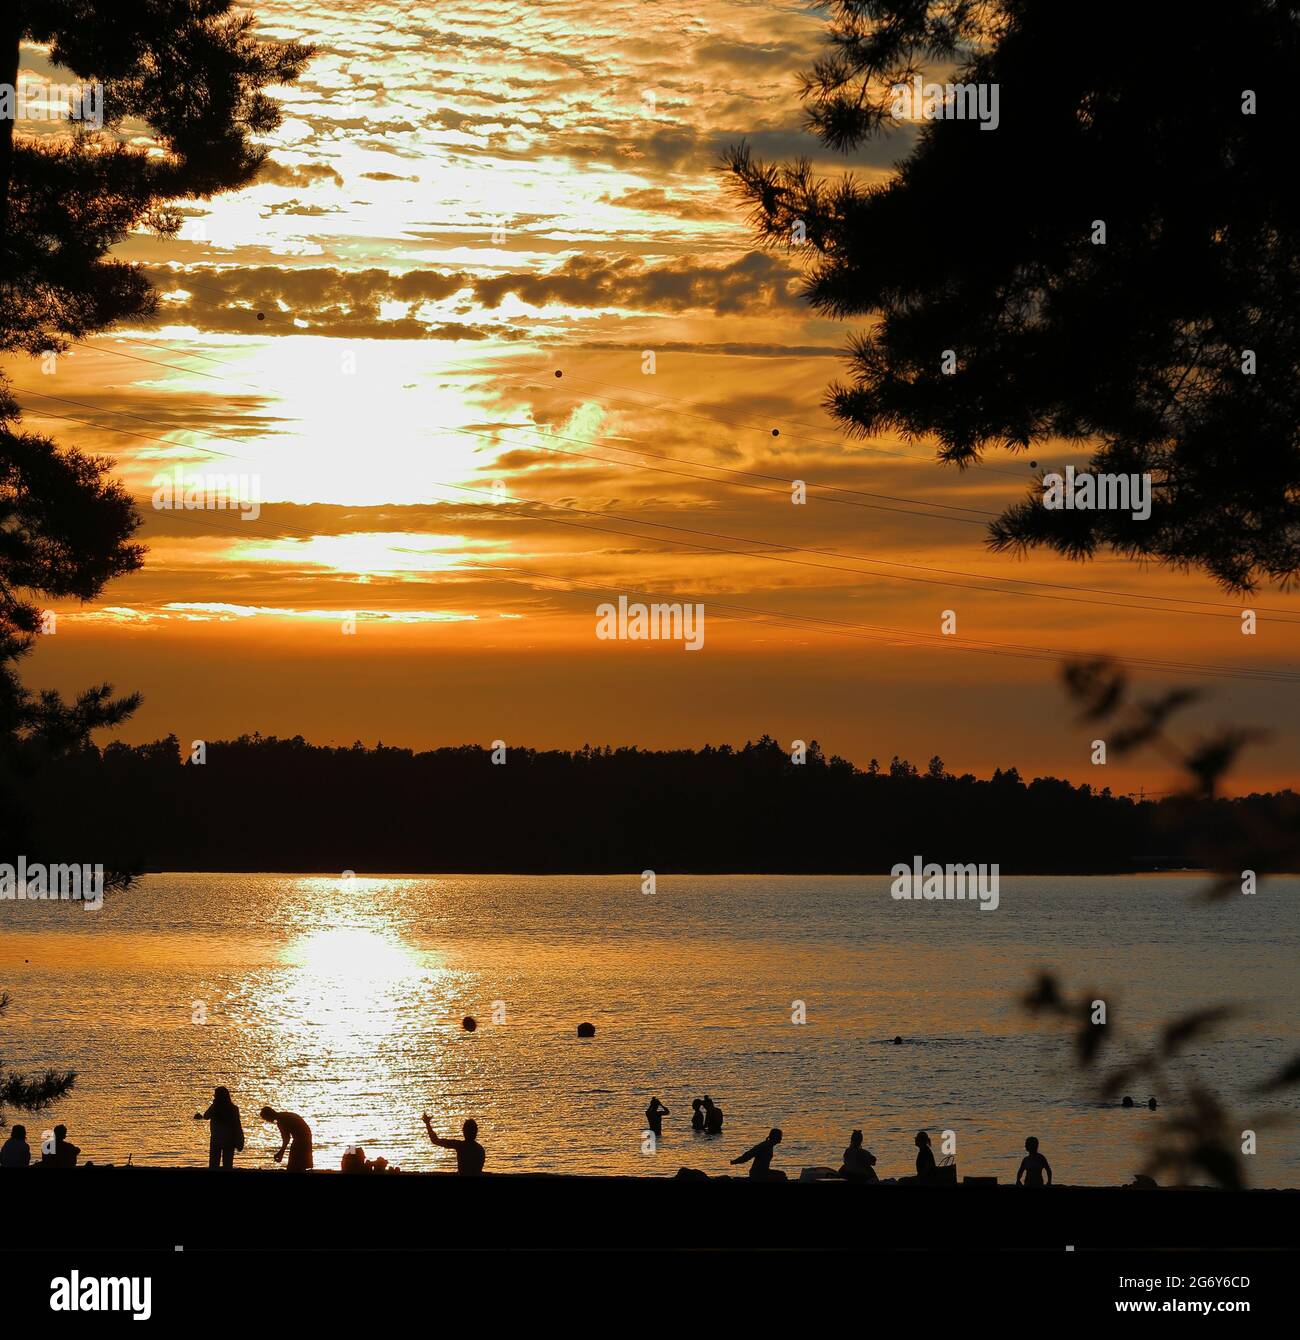 File:Sunset at Hietaniemi beach.jpg - Wikimedia Commons